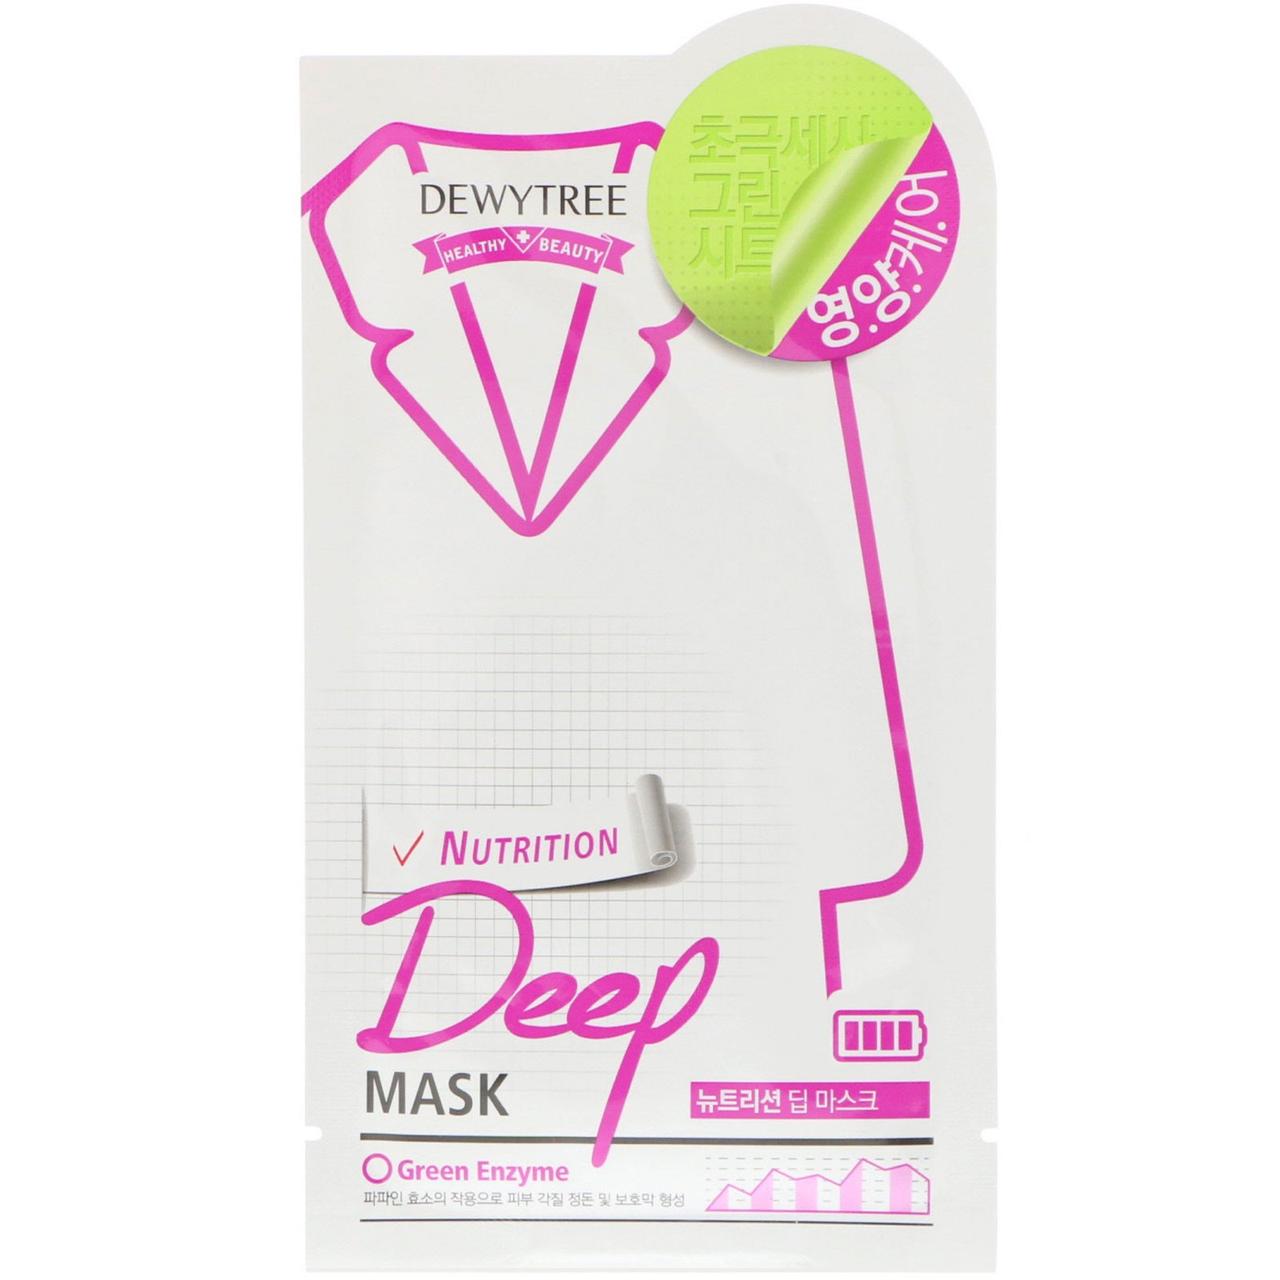 Dewytree, Deep Mask, Nutrition, 1 Mask, 27 g